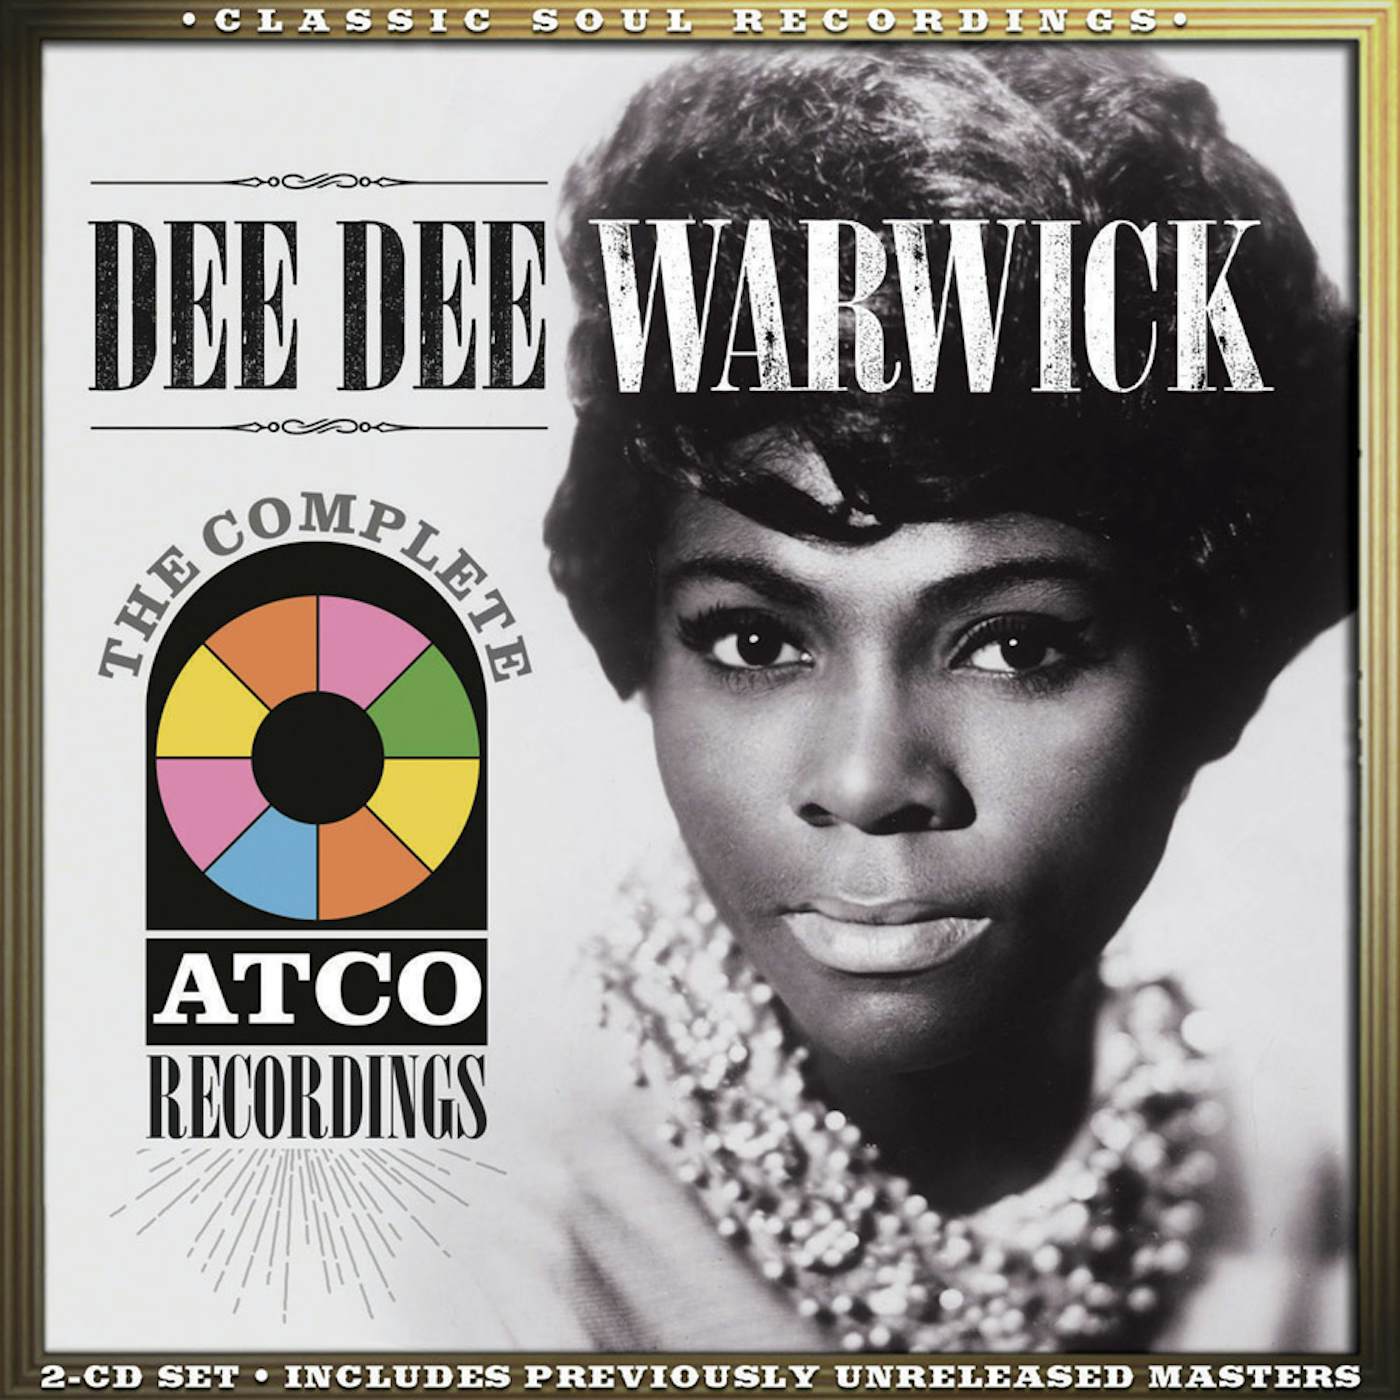 Dee Dee Warwick COMPLETE ATCO RECORDINGS CD